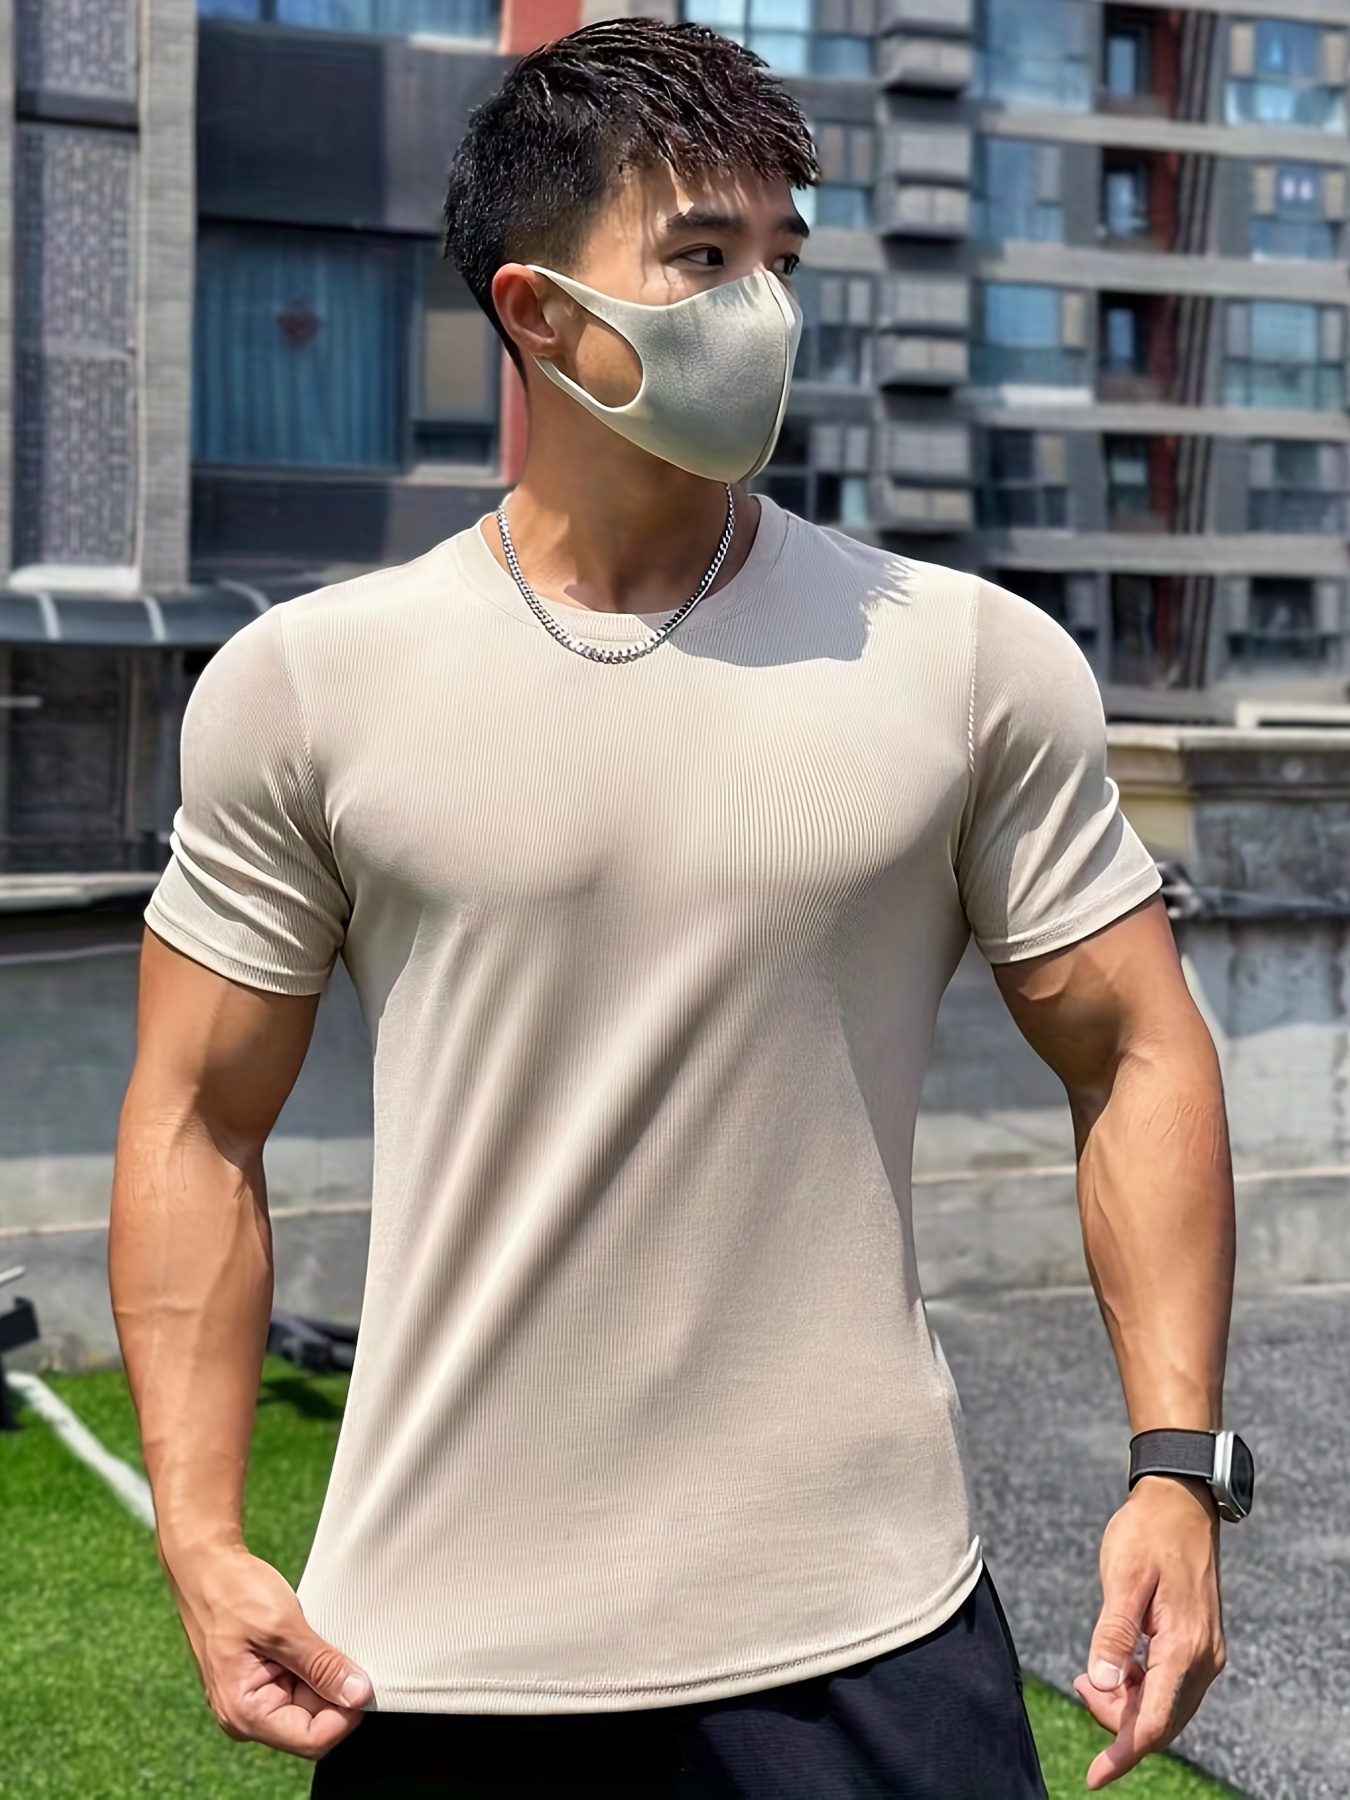 Hearuisavy Sports Shirts Breathable Workout Sportswear Fitness